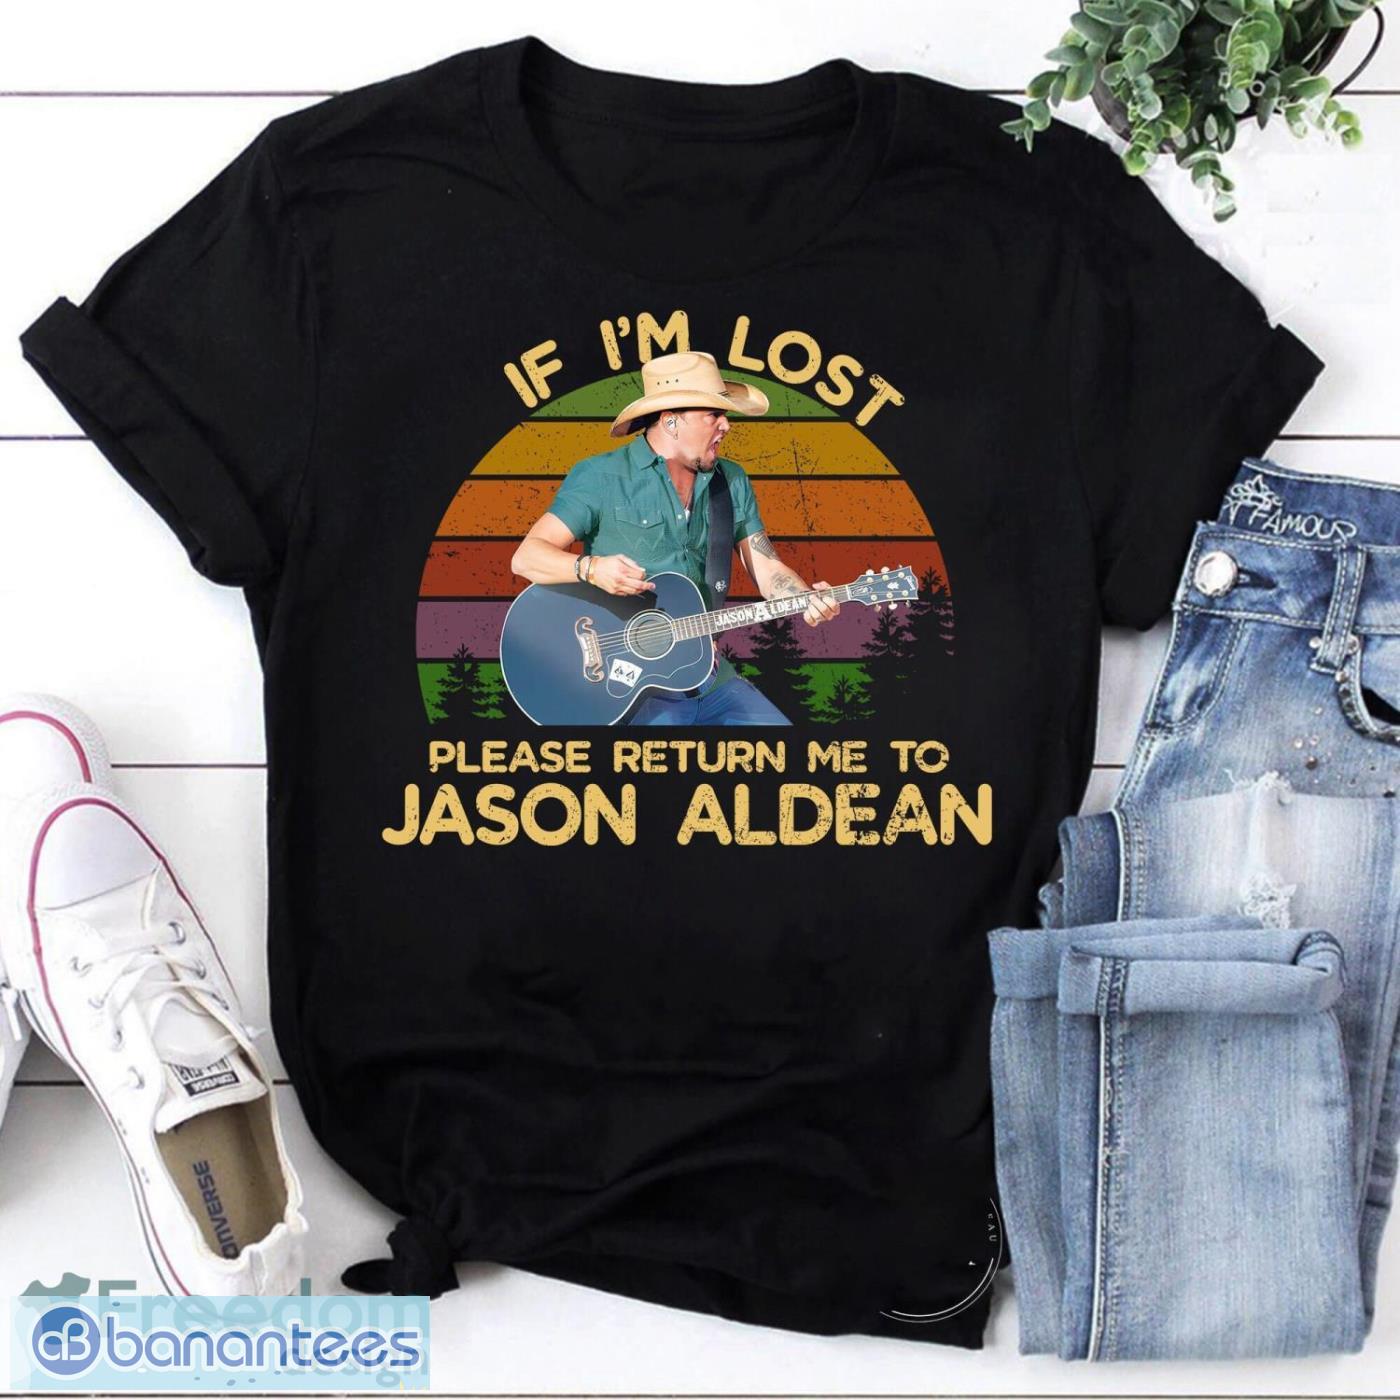 If I’m Lost Please Return Me To Jason Aldean Vintage T-Shirt Return Me To Jason Aldean Shirt Product Photo 1